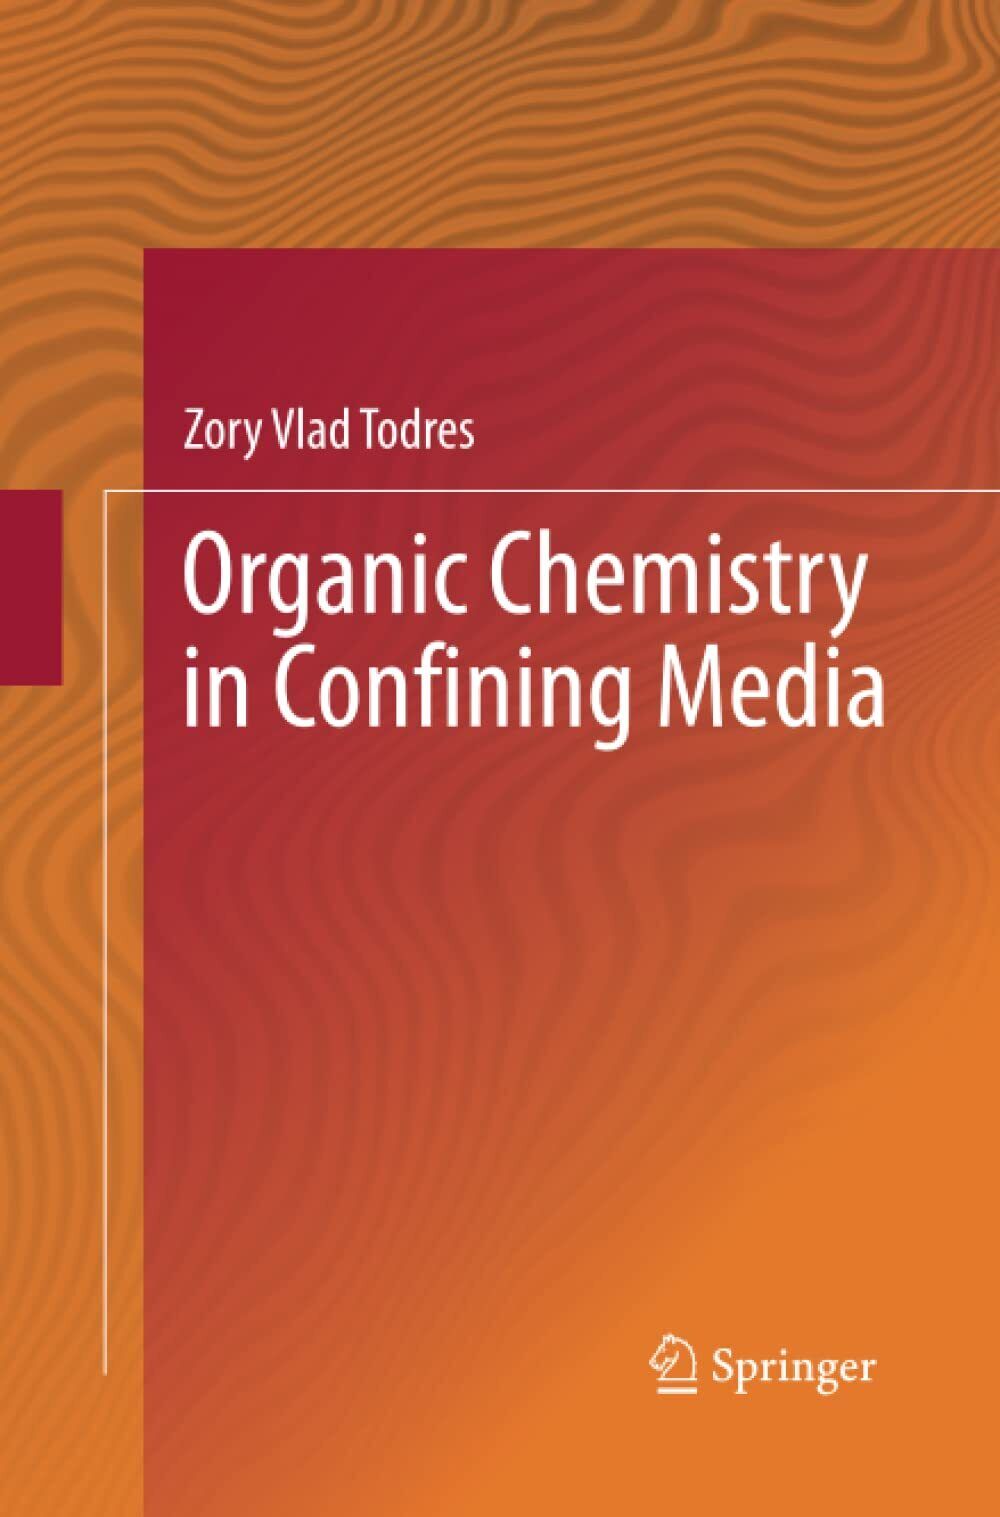 Organic Chemistry in Confining Media - Zory Vlad Todres - Springer, 2015